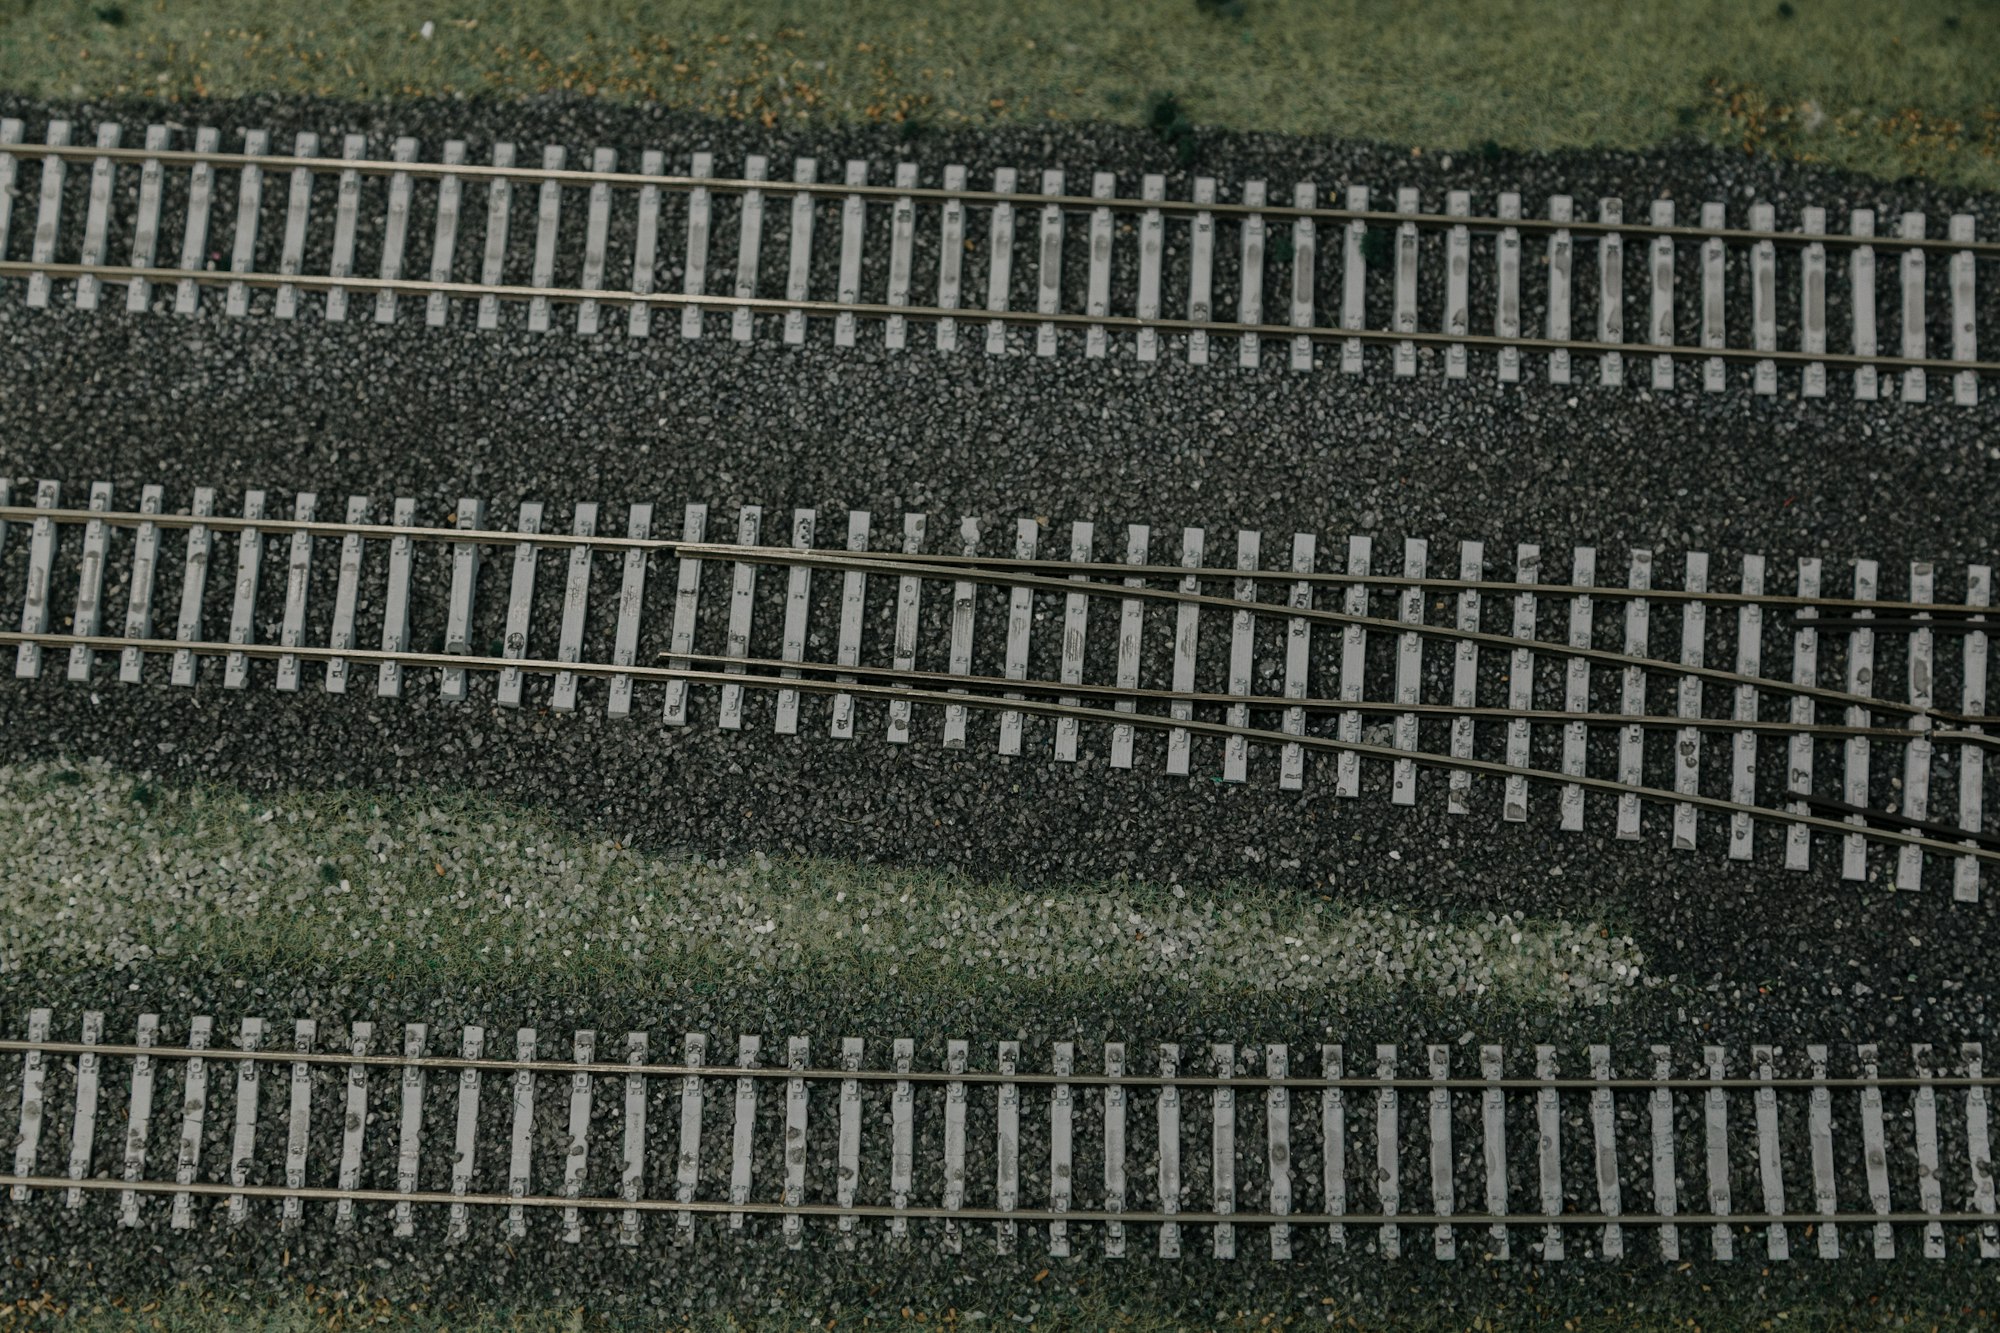 Ballast applied to model train points